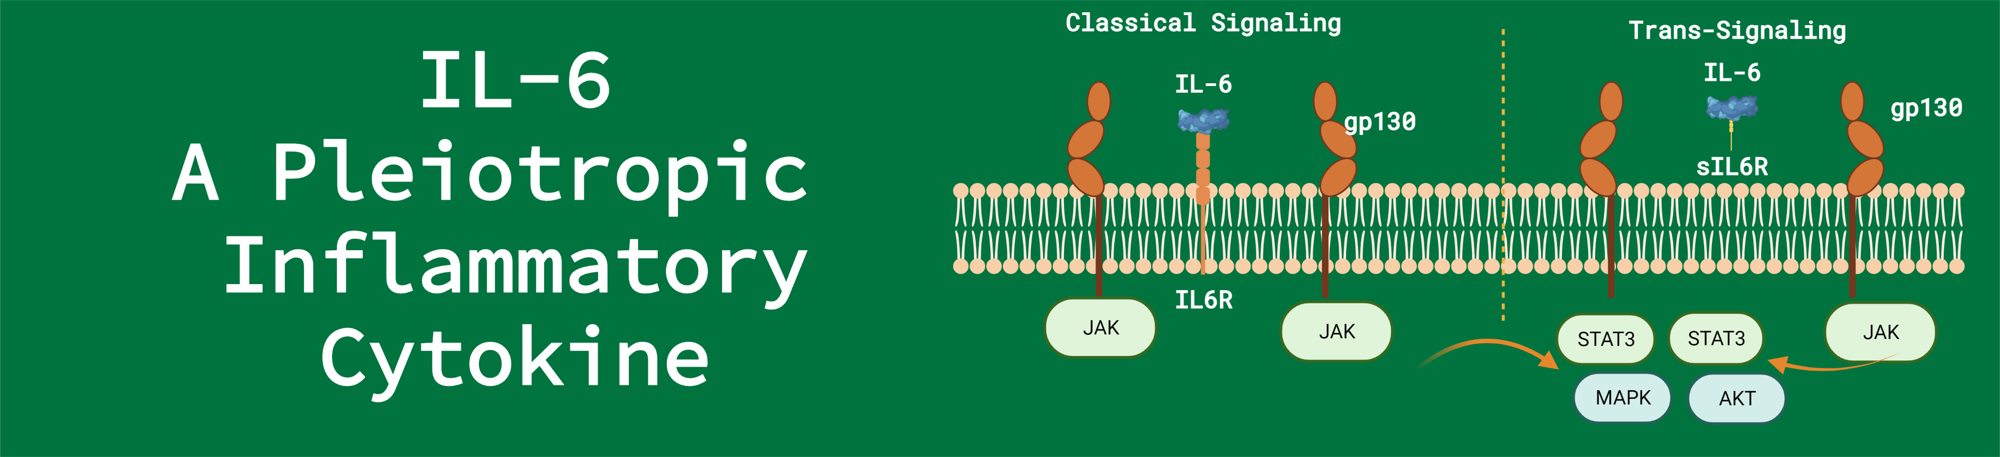 Human IL6: A Pleiotropic Inflammatory Cytokine